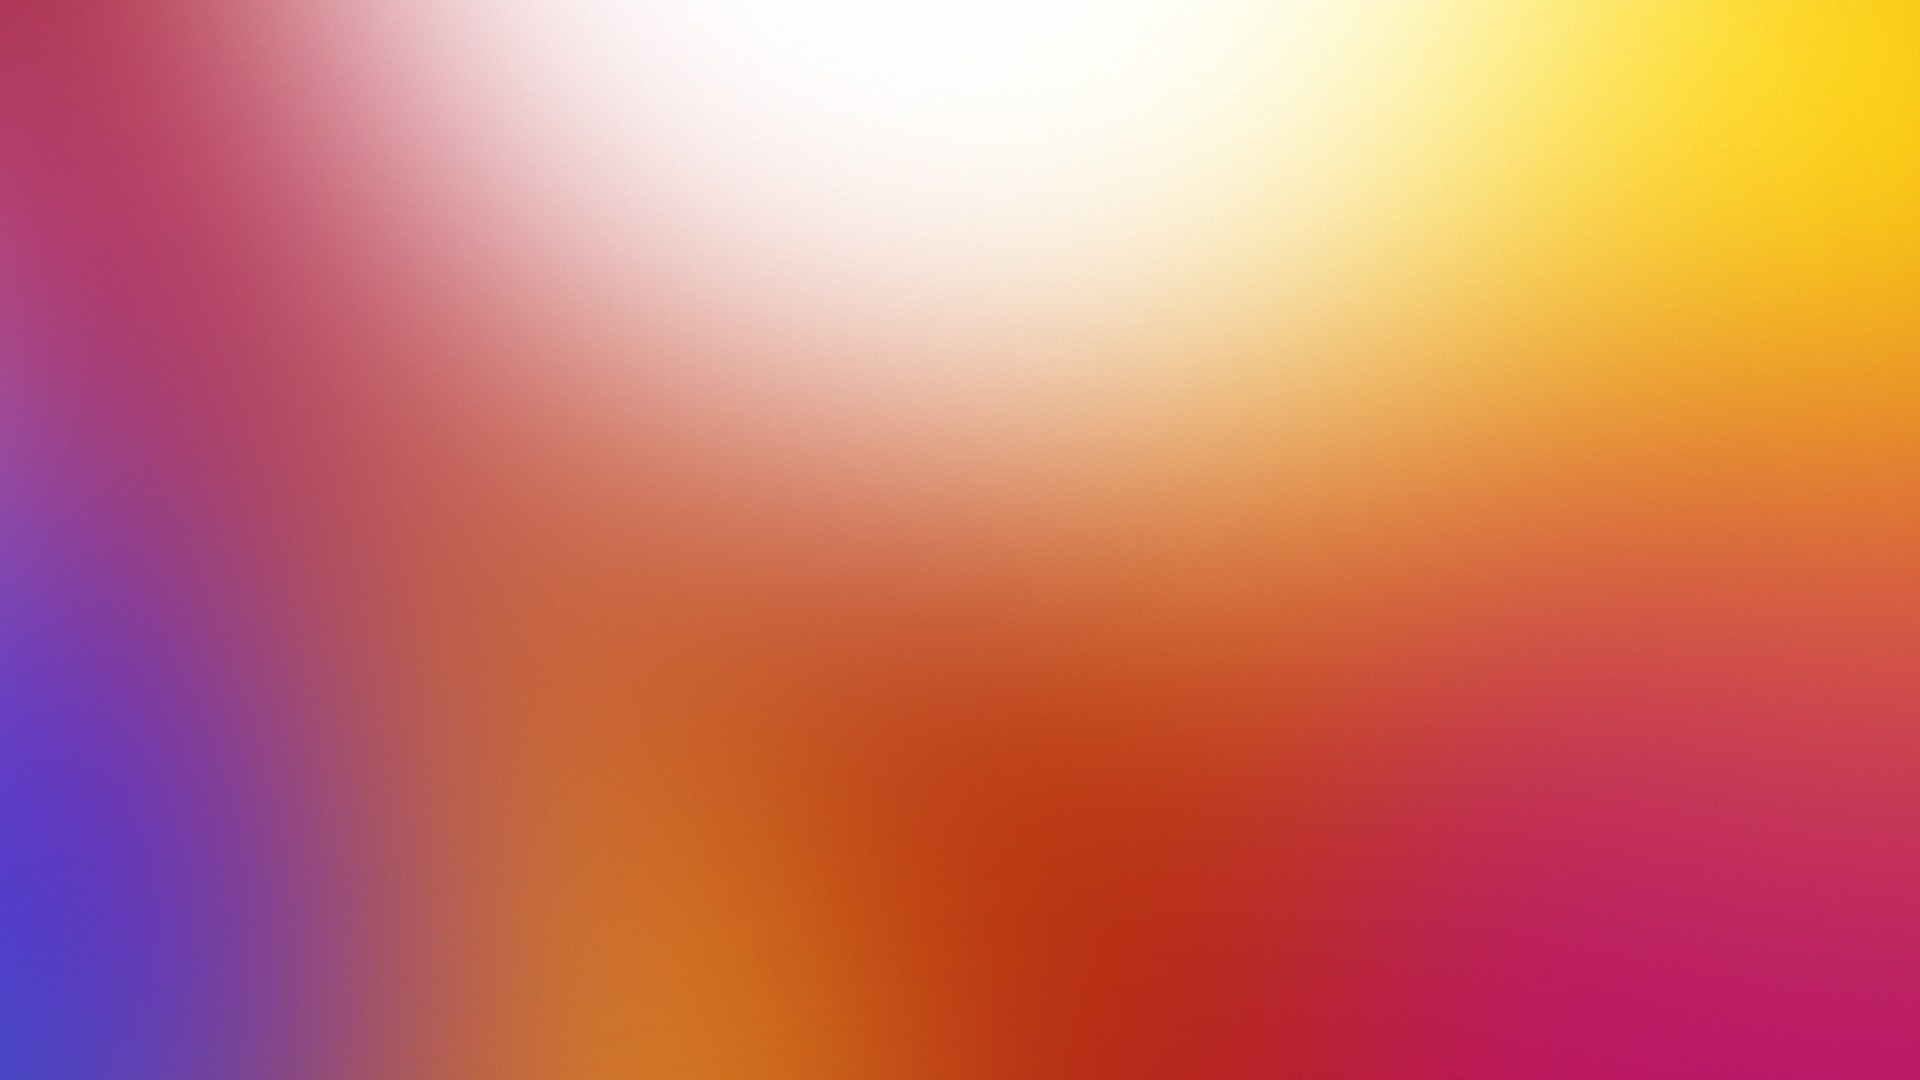 lenovo k5 note wallpaper hd,orange,yellow,pink,purple,red